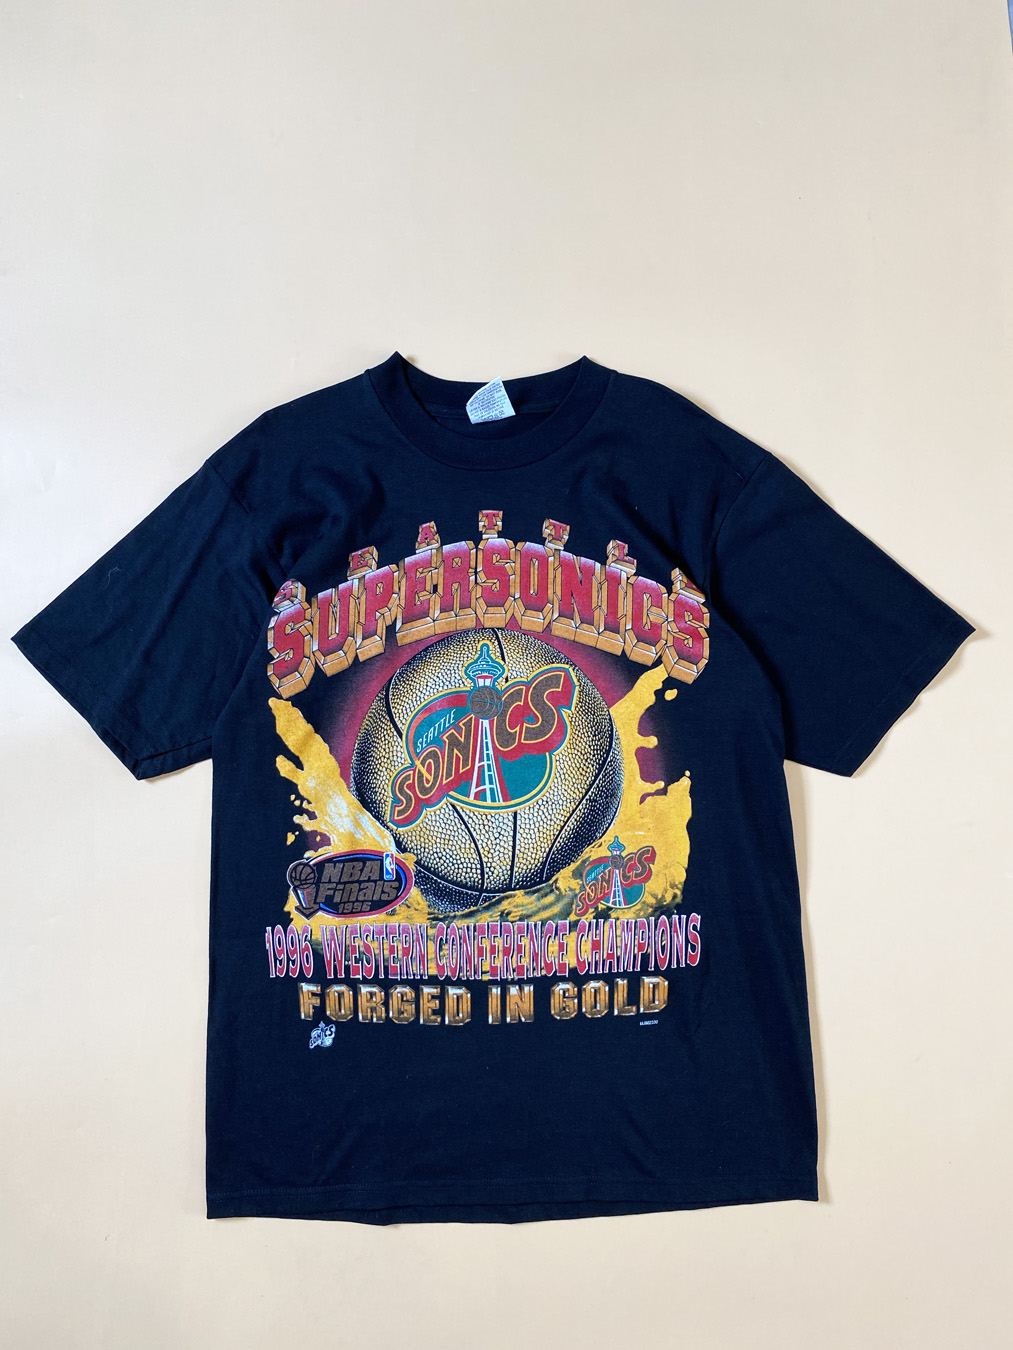 Seattle Sonics Supersonics 1995 96 Champion Shooting Shirt 